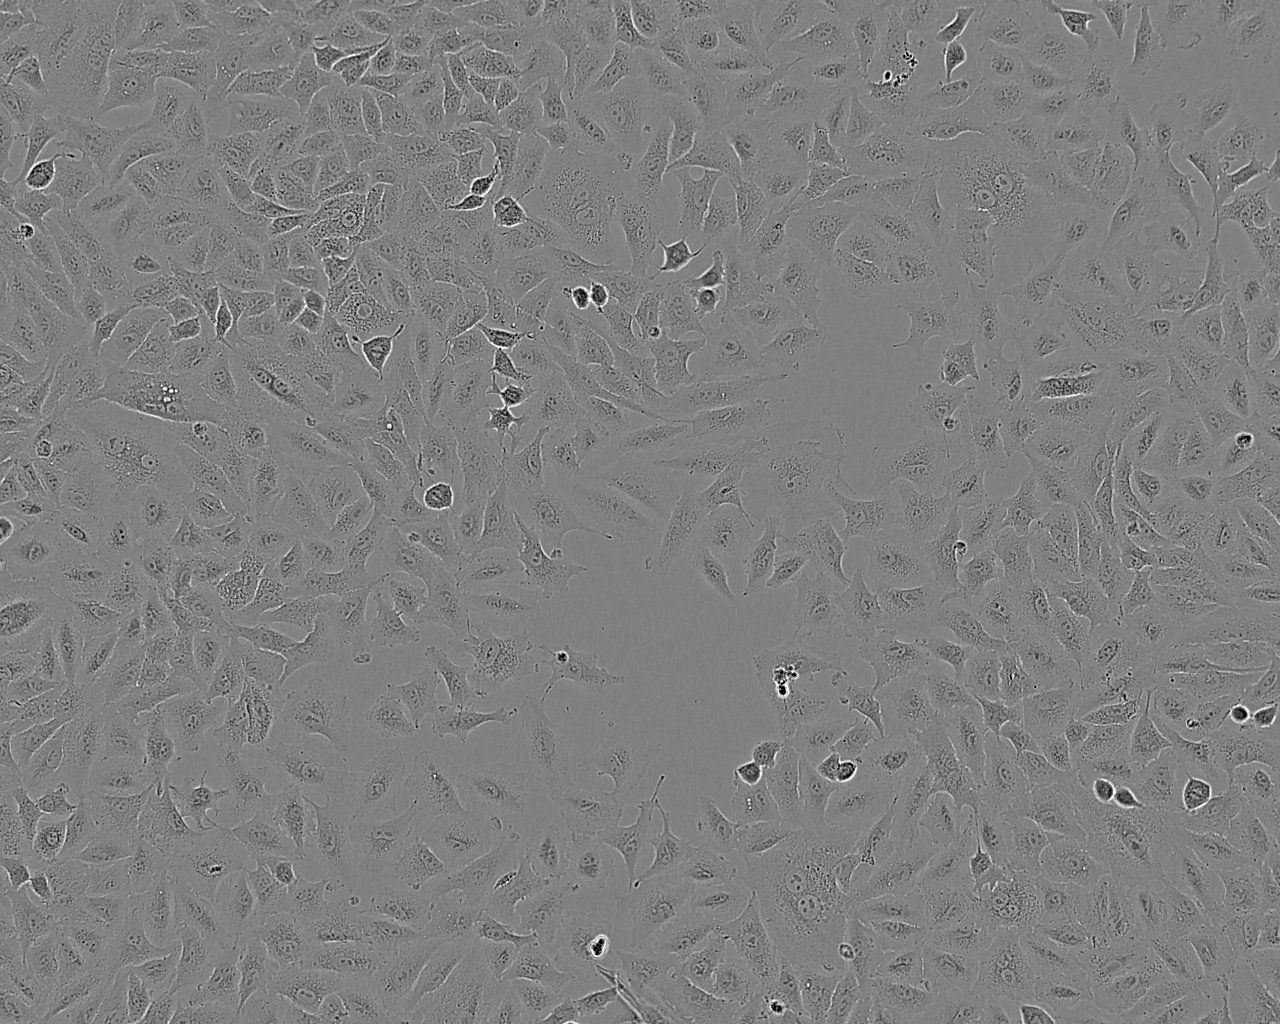 SK-N-DZ Cells|人成神经骨髓瘤细胞系,SK-N-DZ Cells